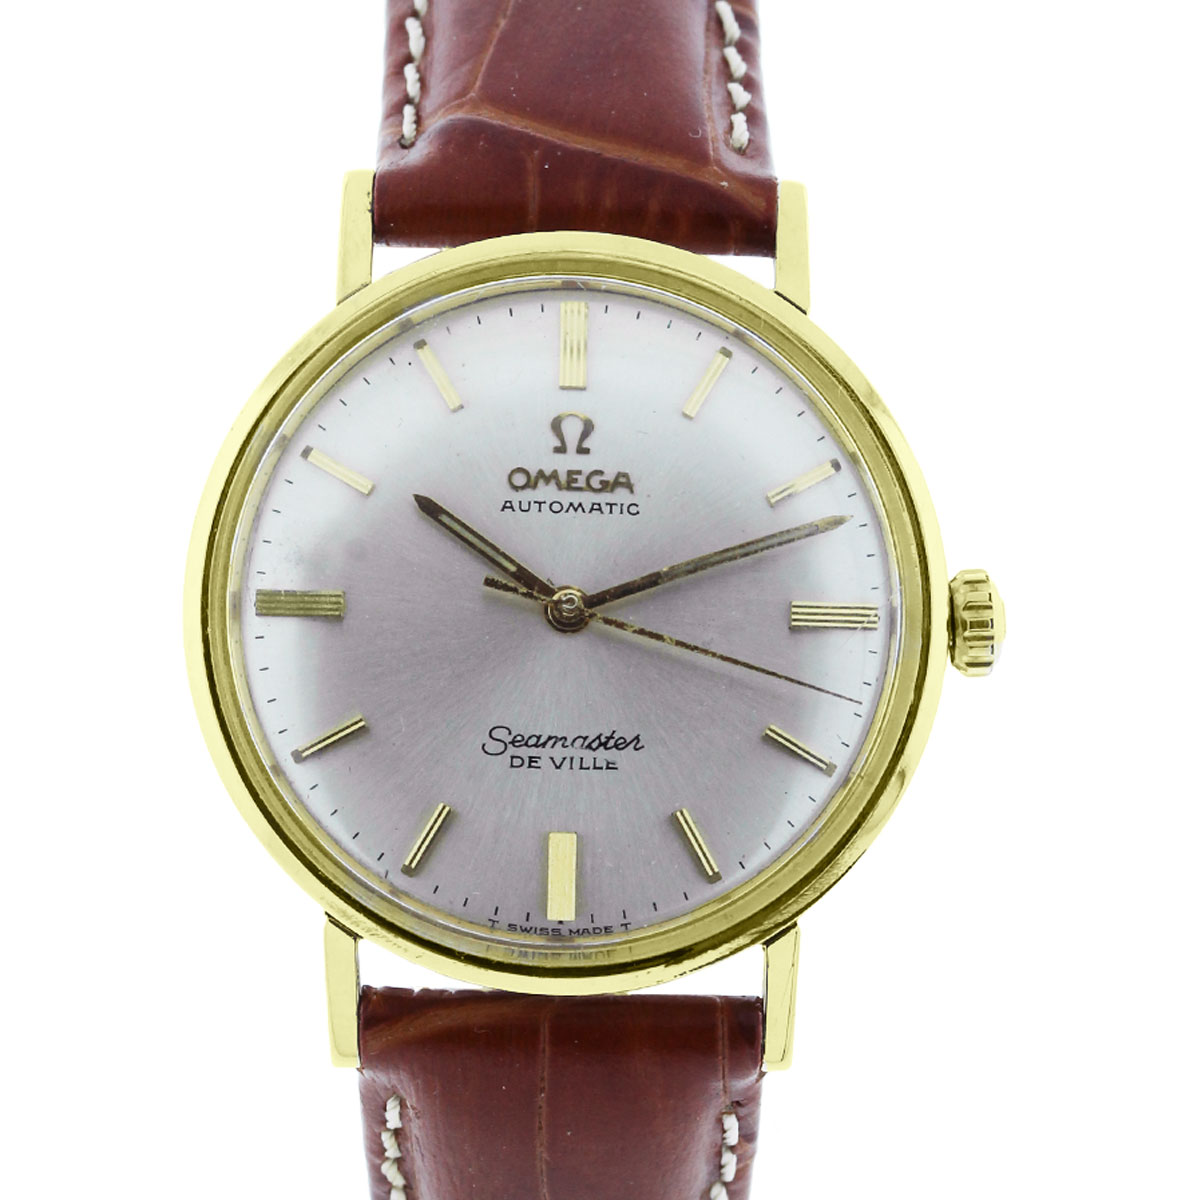 Omega Seamaster Deville on Leather Strap Vintage Watch